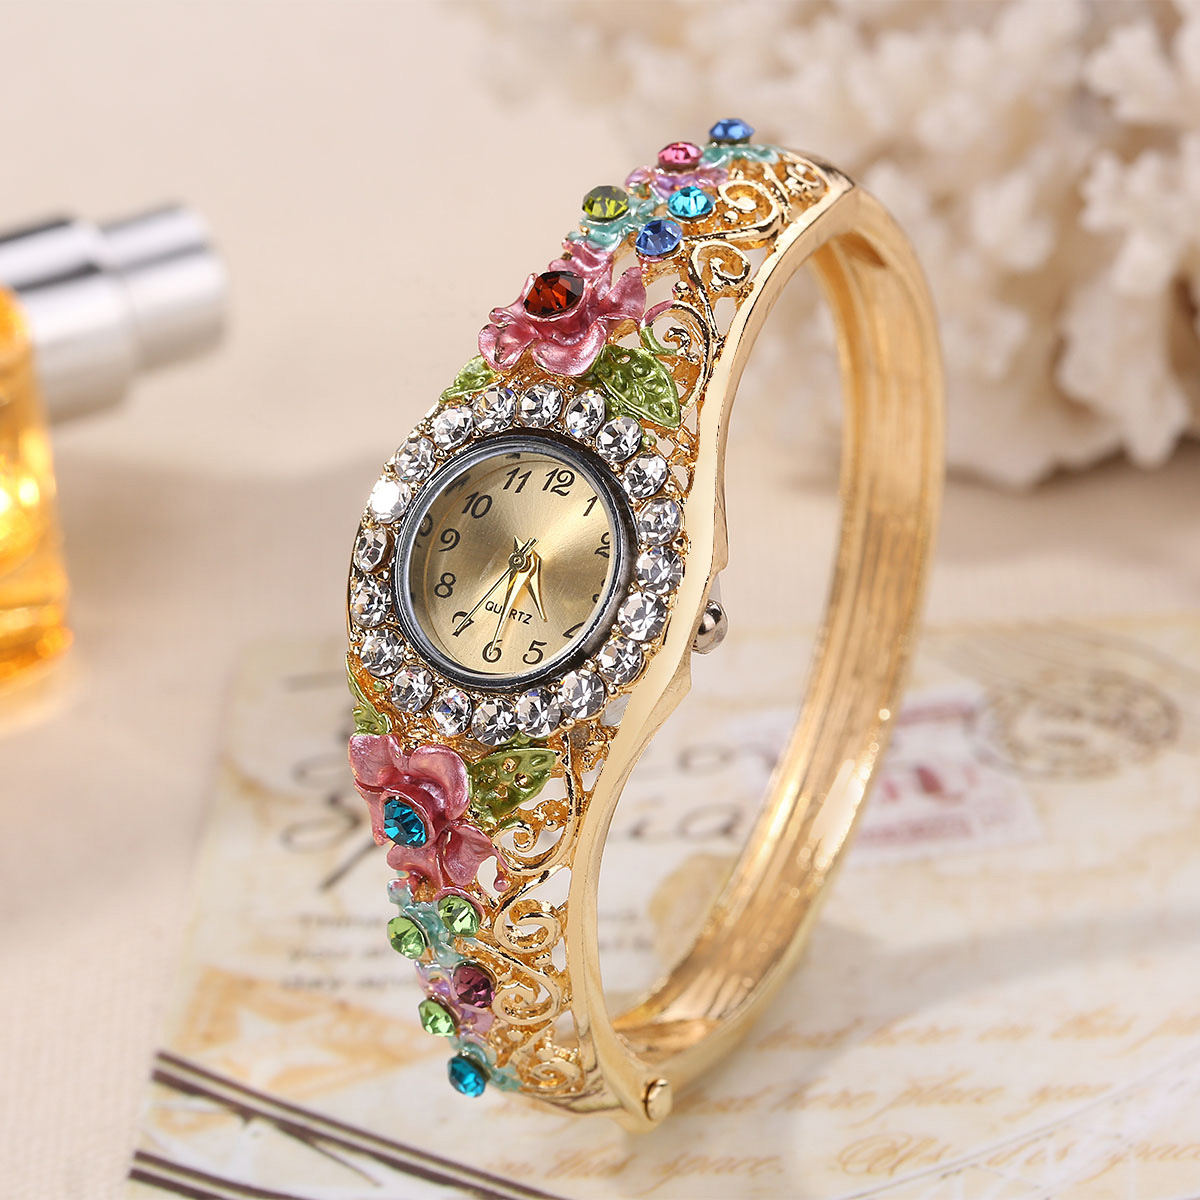 Wish Popular Products Vintage Cloisonne 3D Flower Blooming Rich Women's Wrist Watch Women's Fashion Bracelet Quartz Watch